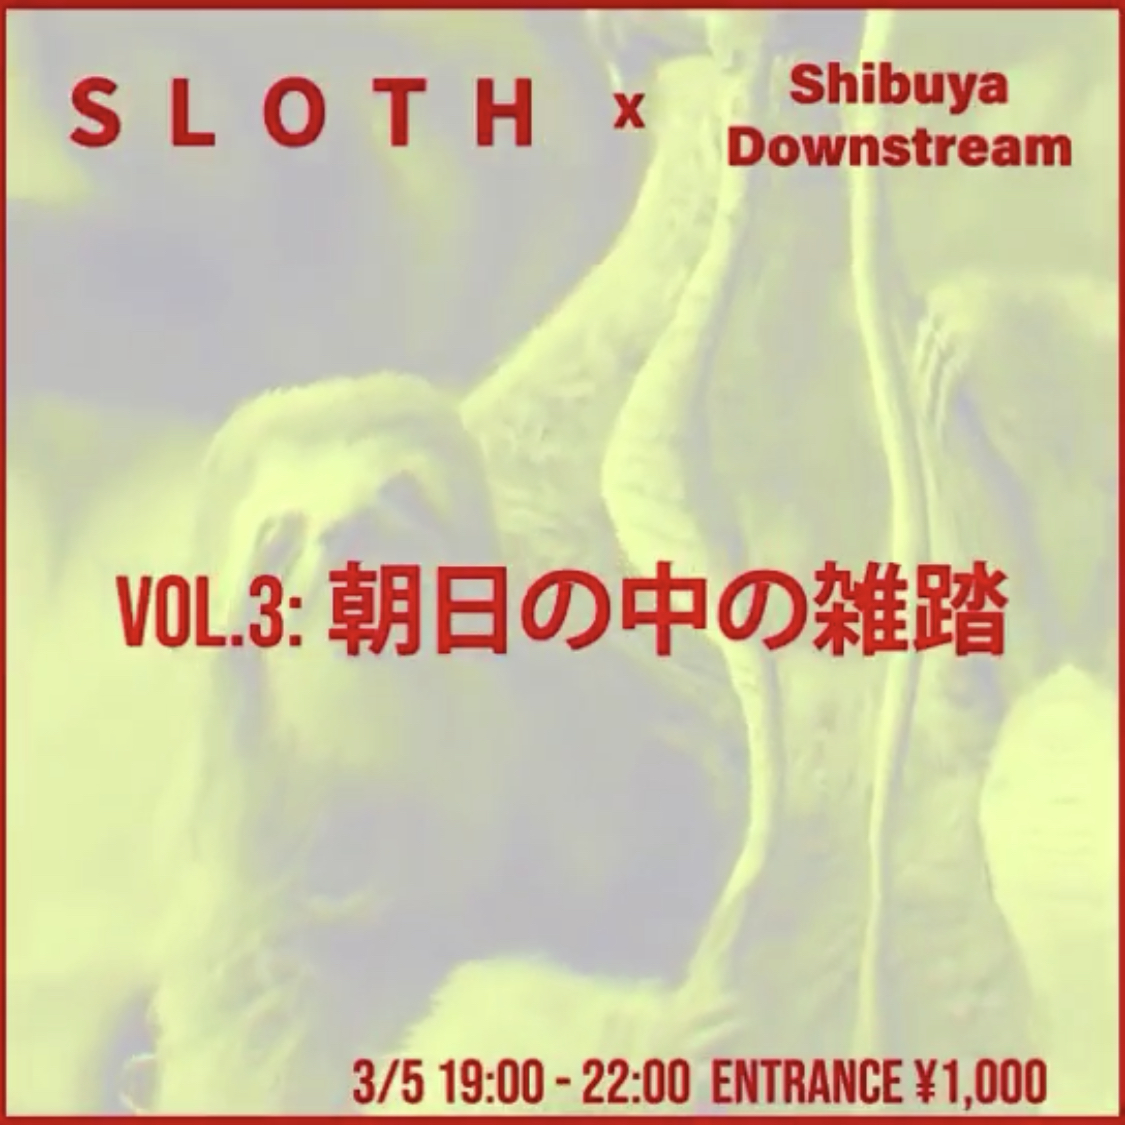 Shibuya Downstream Vol.3 「朝日の中の雑踏」